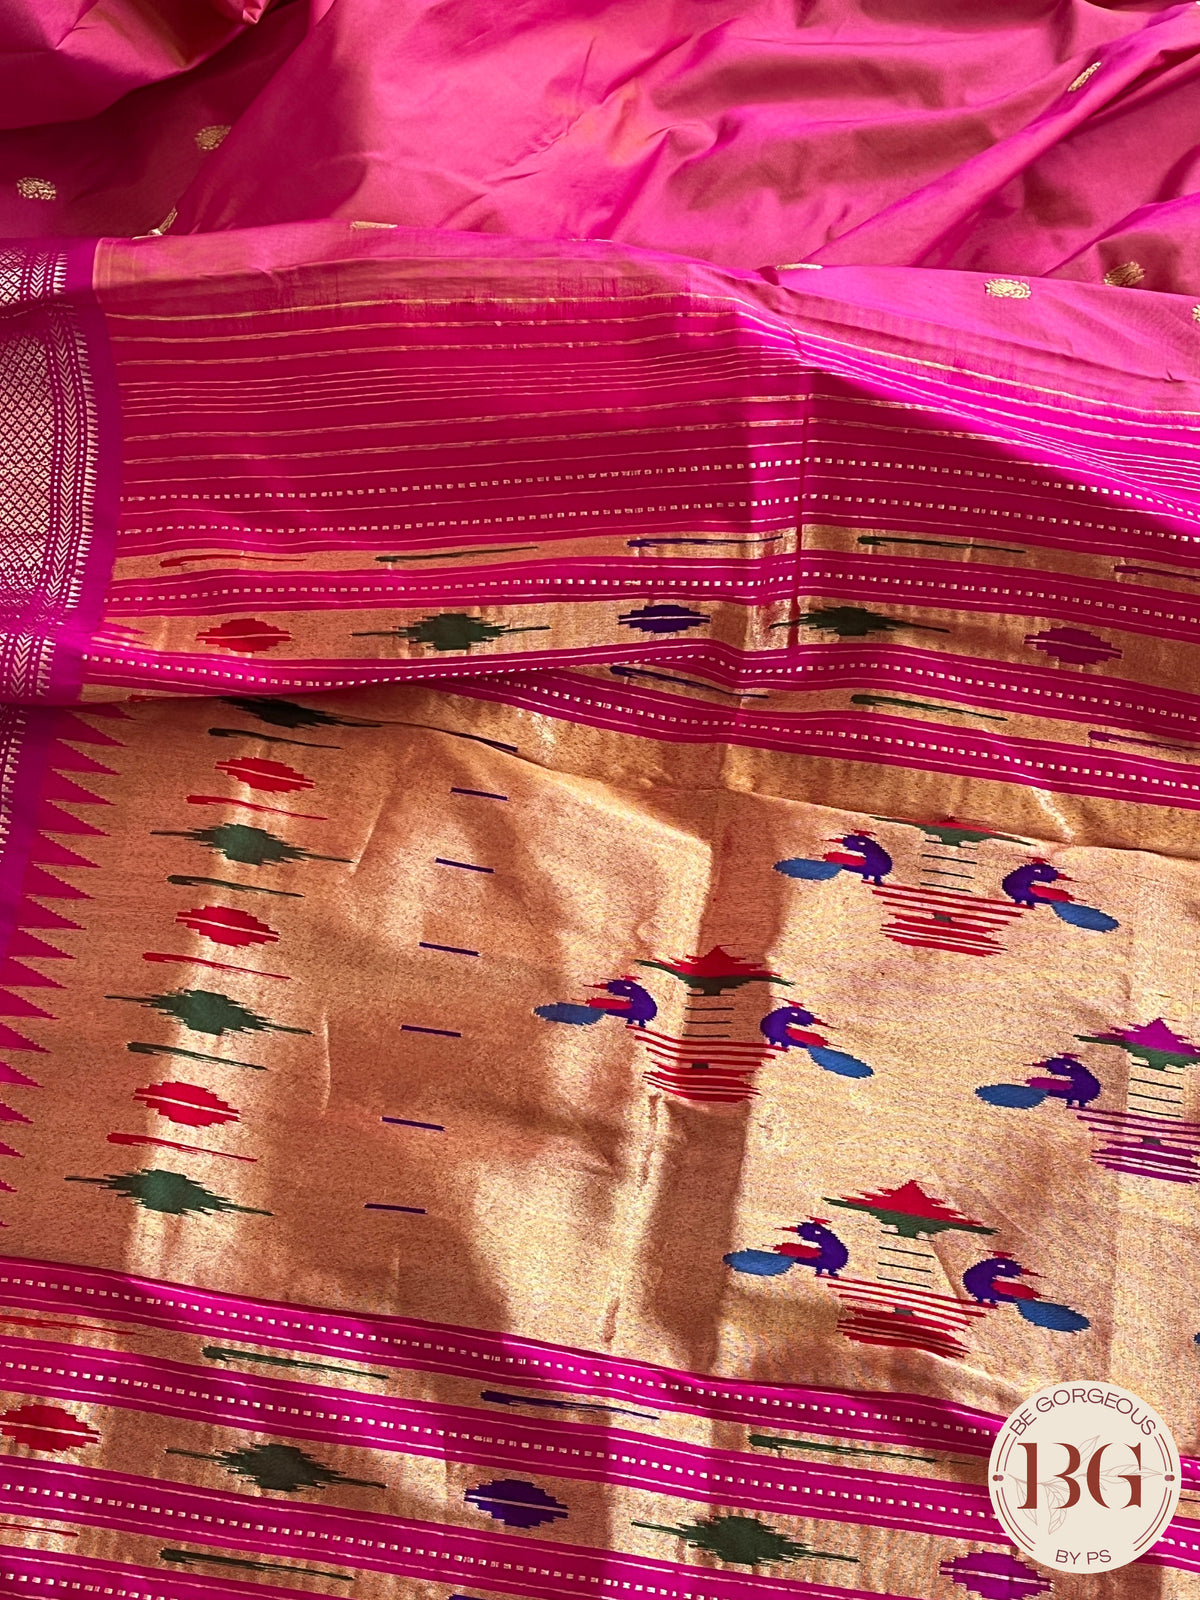 Paithani Traditional Handloom - Pink saree color - pink